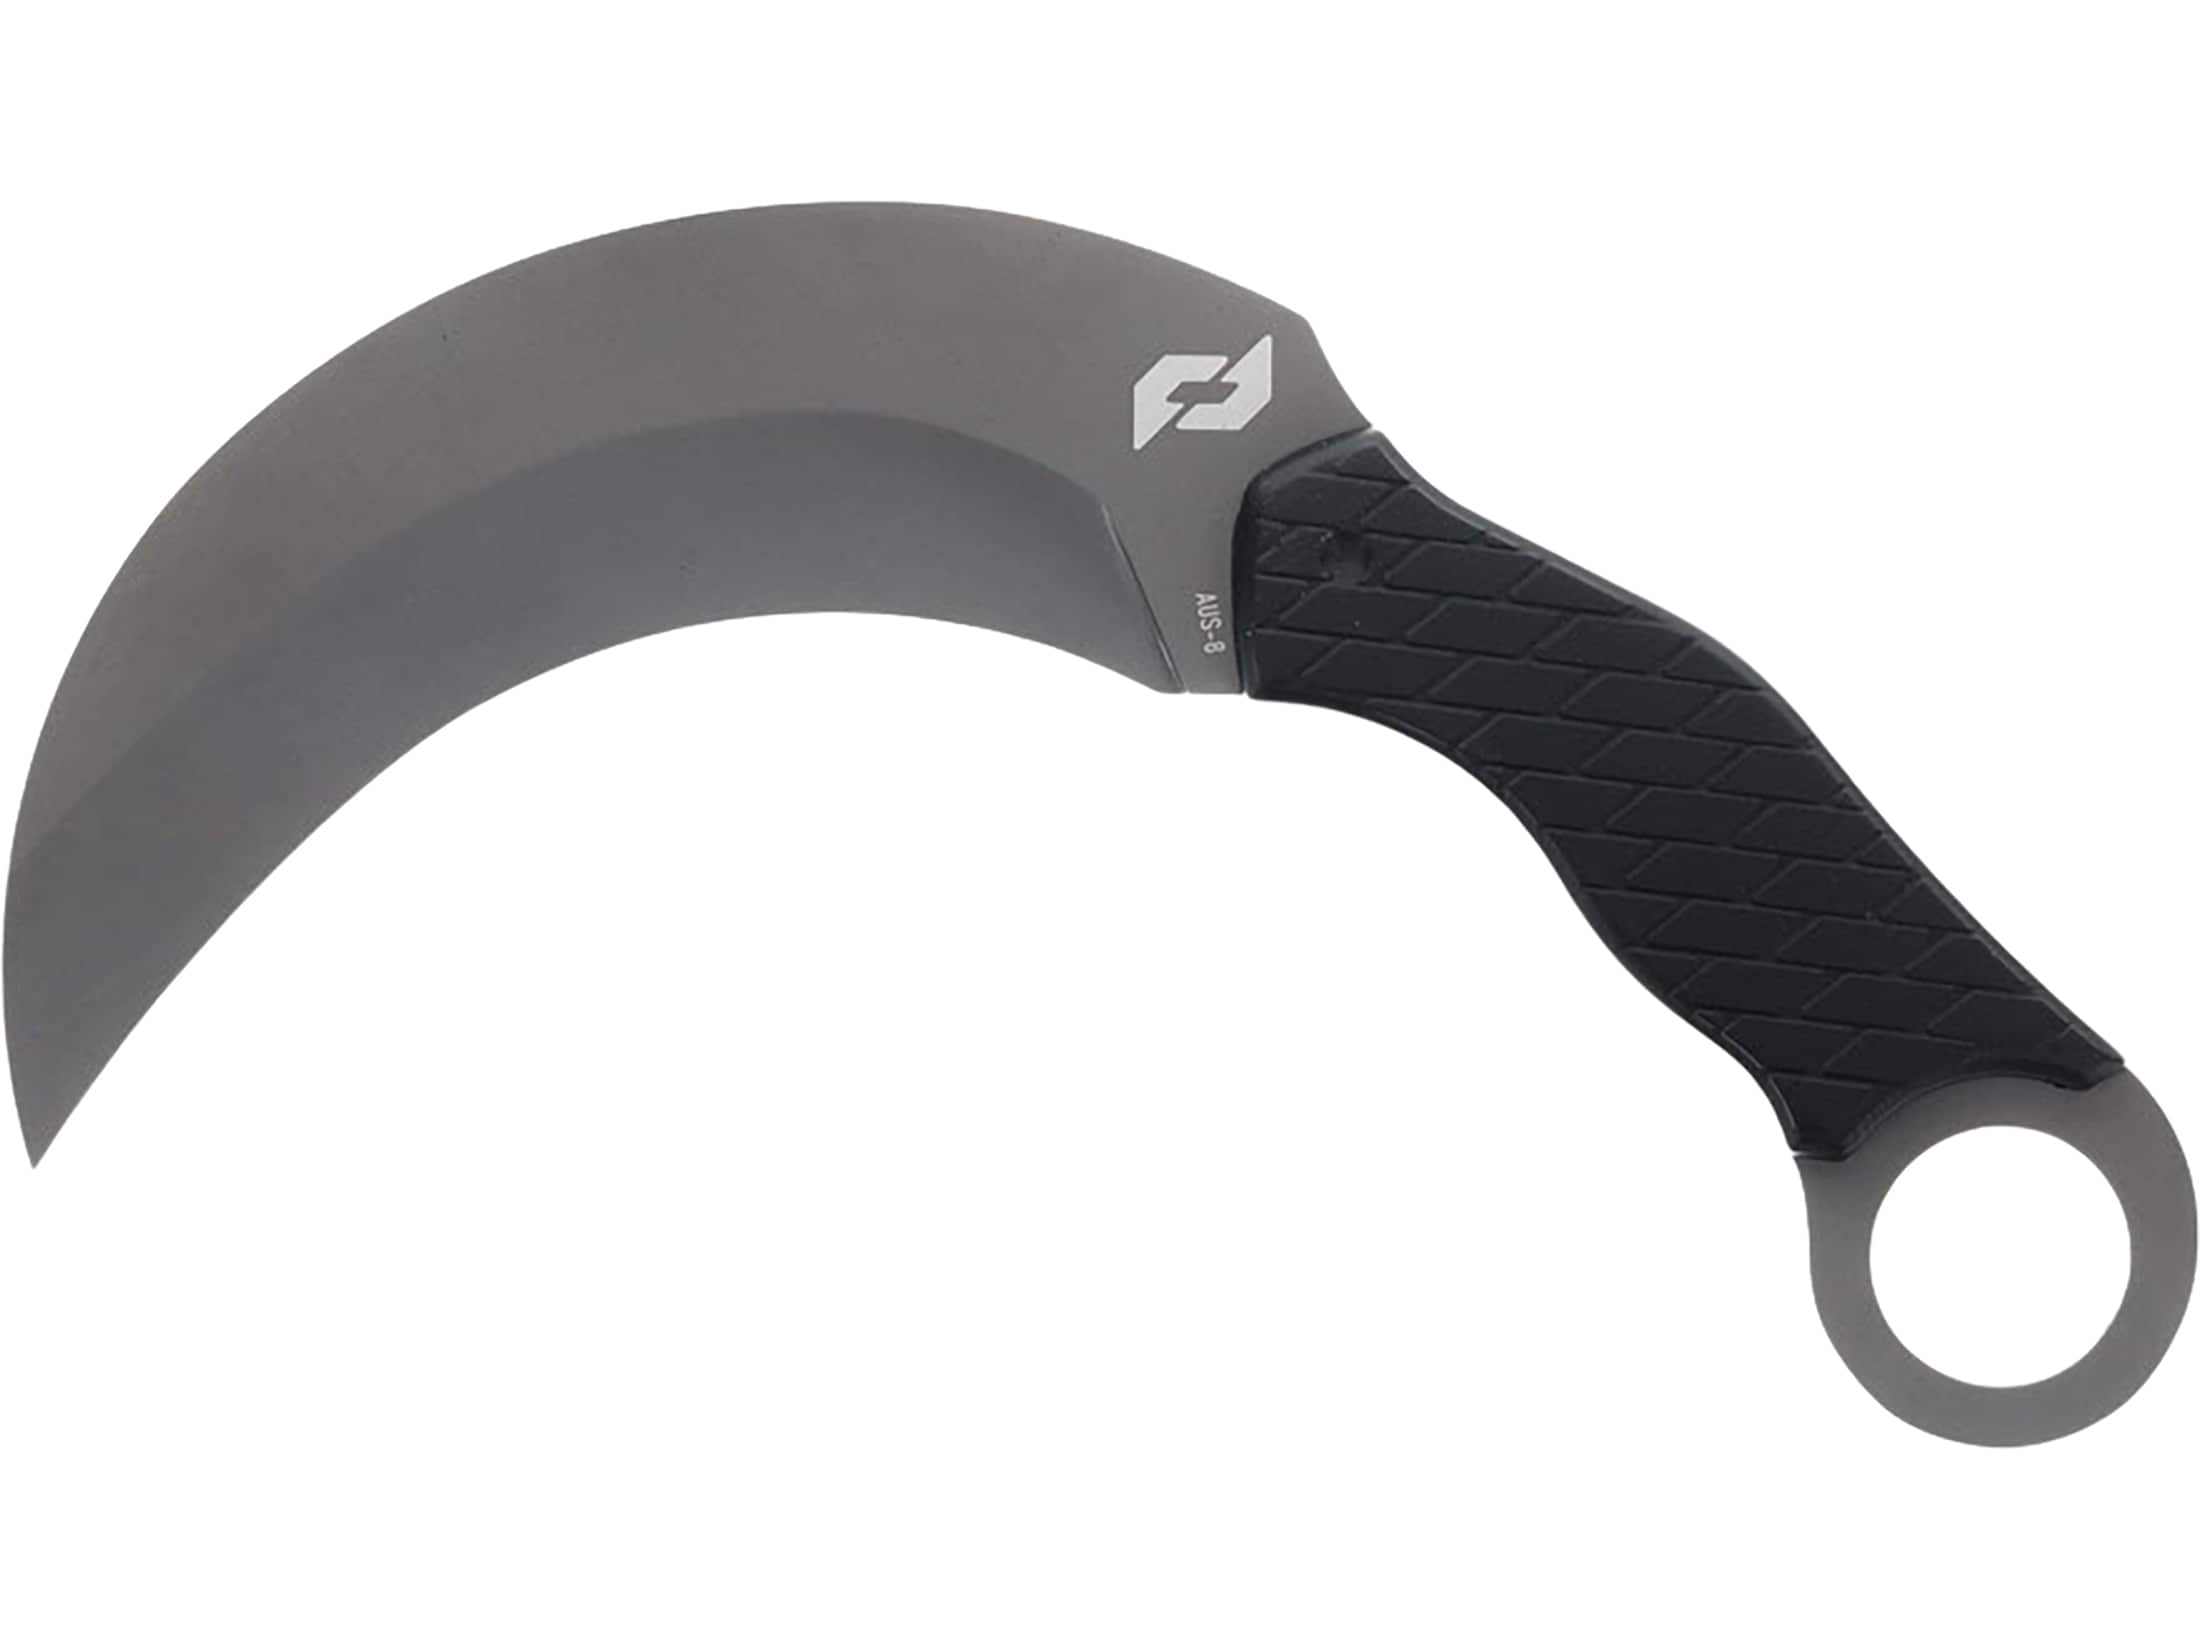 J2 Steel High Polish Karambit Knife for Tactical & Outdoor Usage